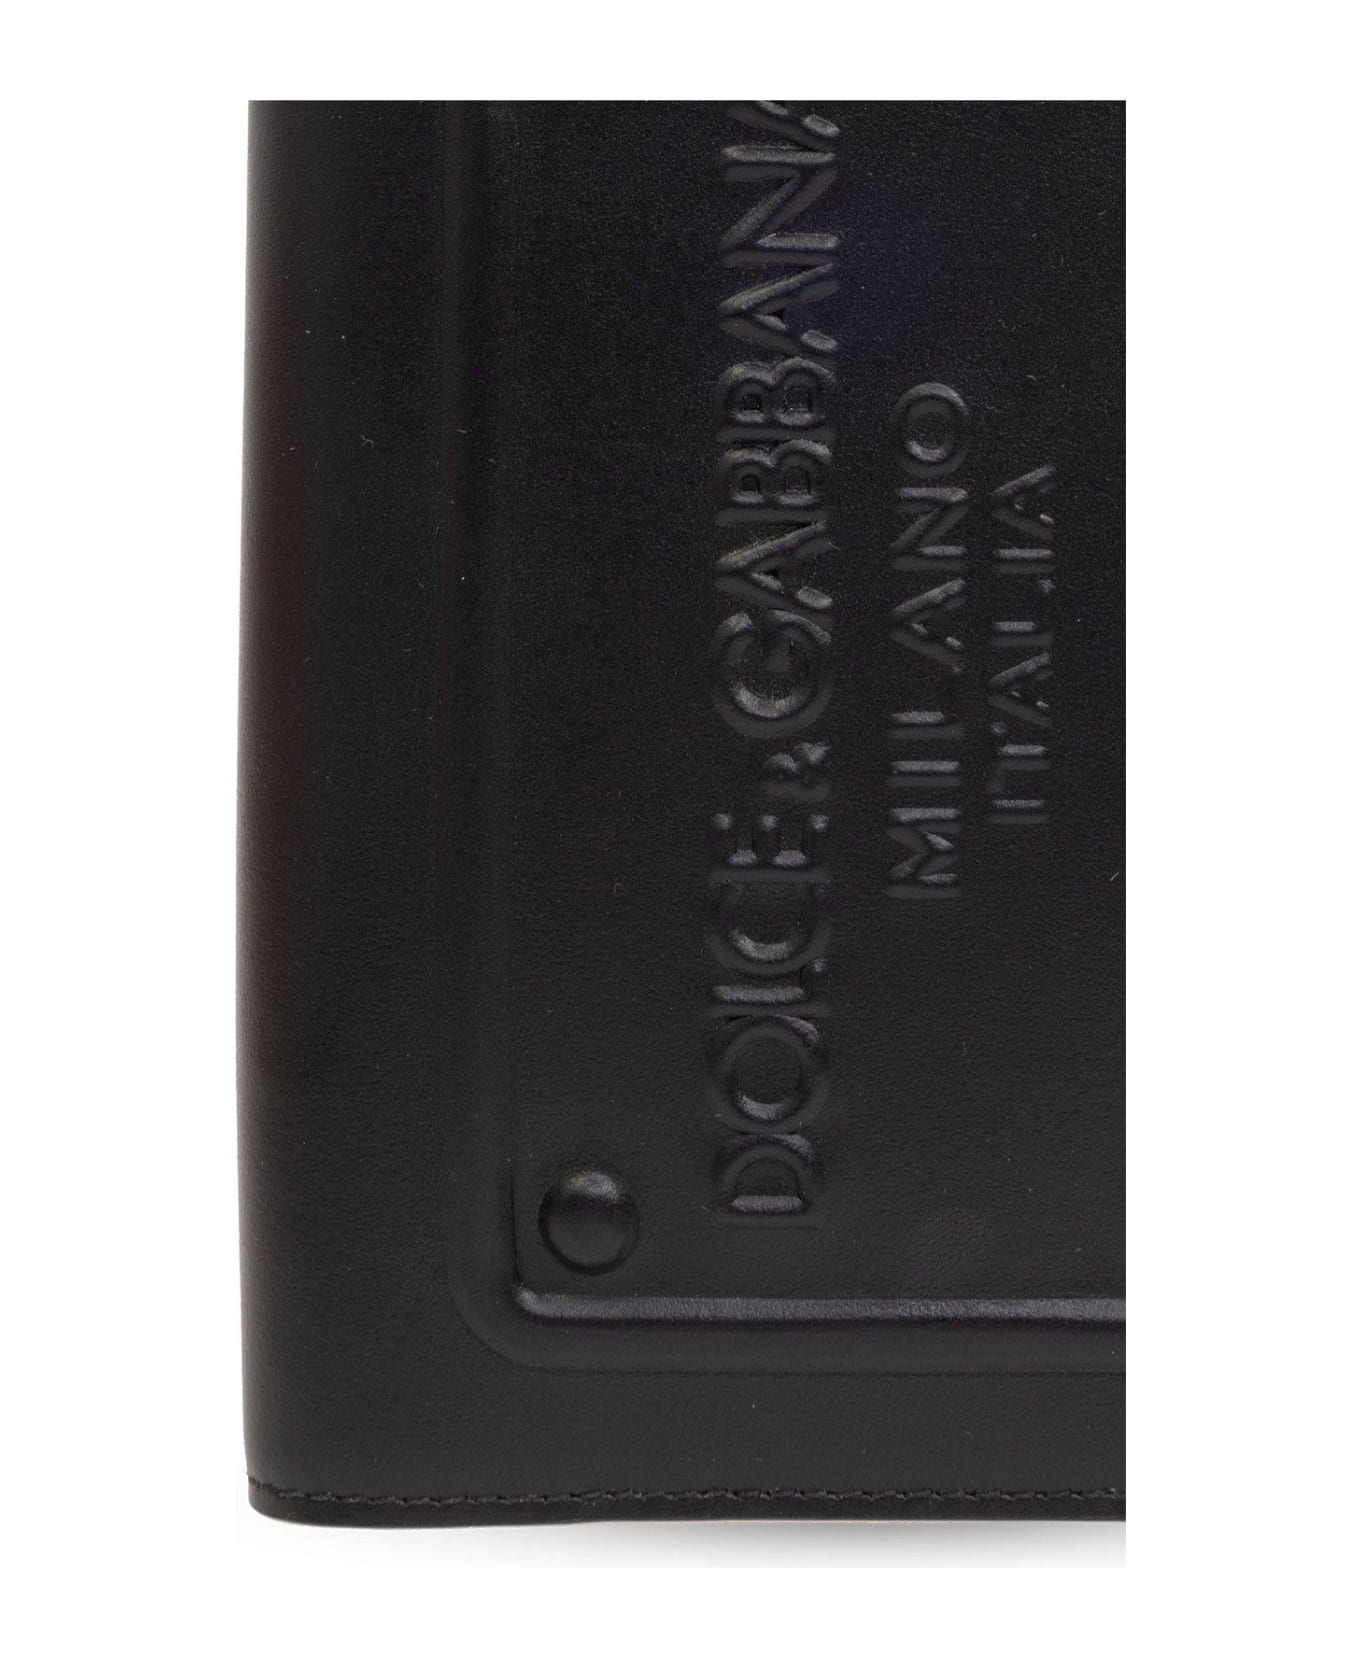 Dolce & Gabbana Passport Holder - Black 財布